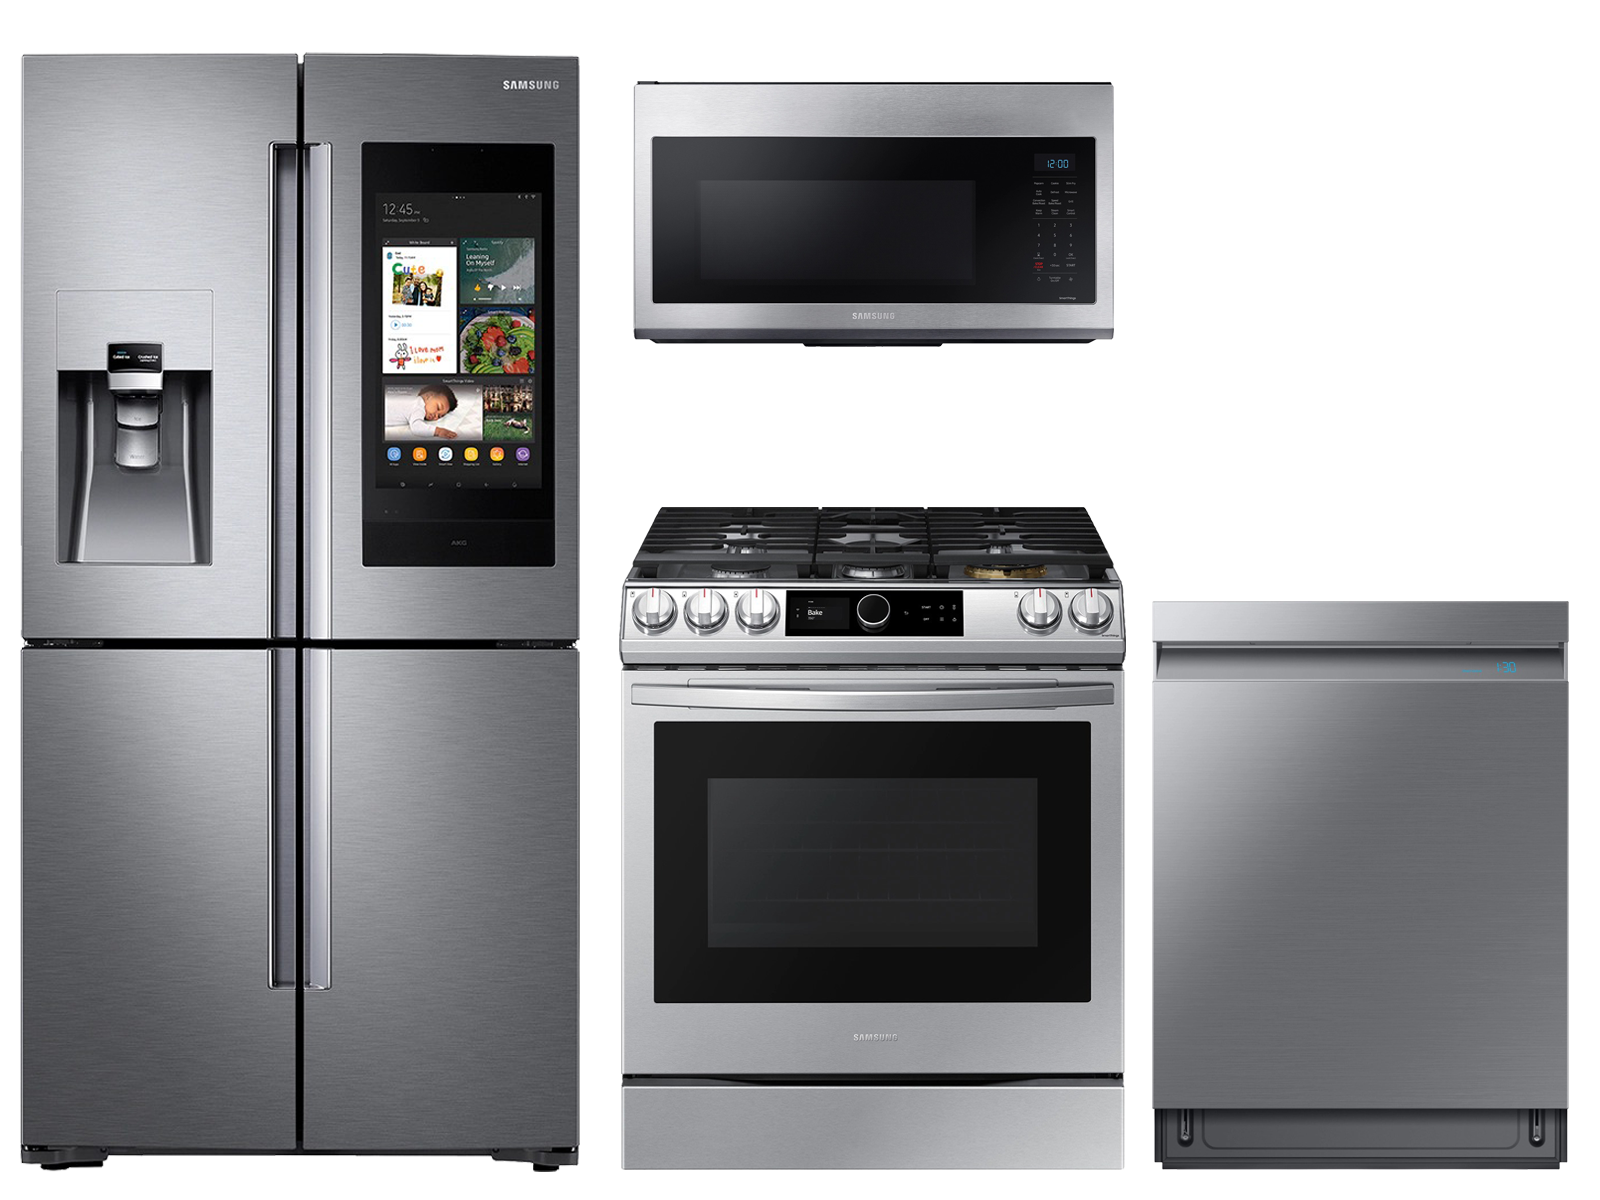 Samsung 22 cu. ft. Family HubTM counter depth 4-door refrigerator, gas range, microwave and Smart Linear dishwasher package(BNDL-1614702835384)